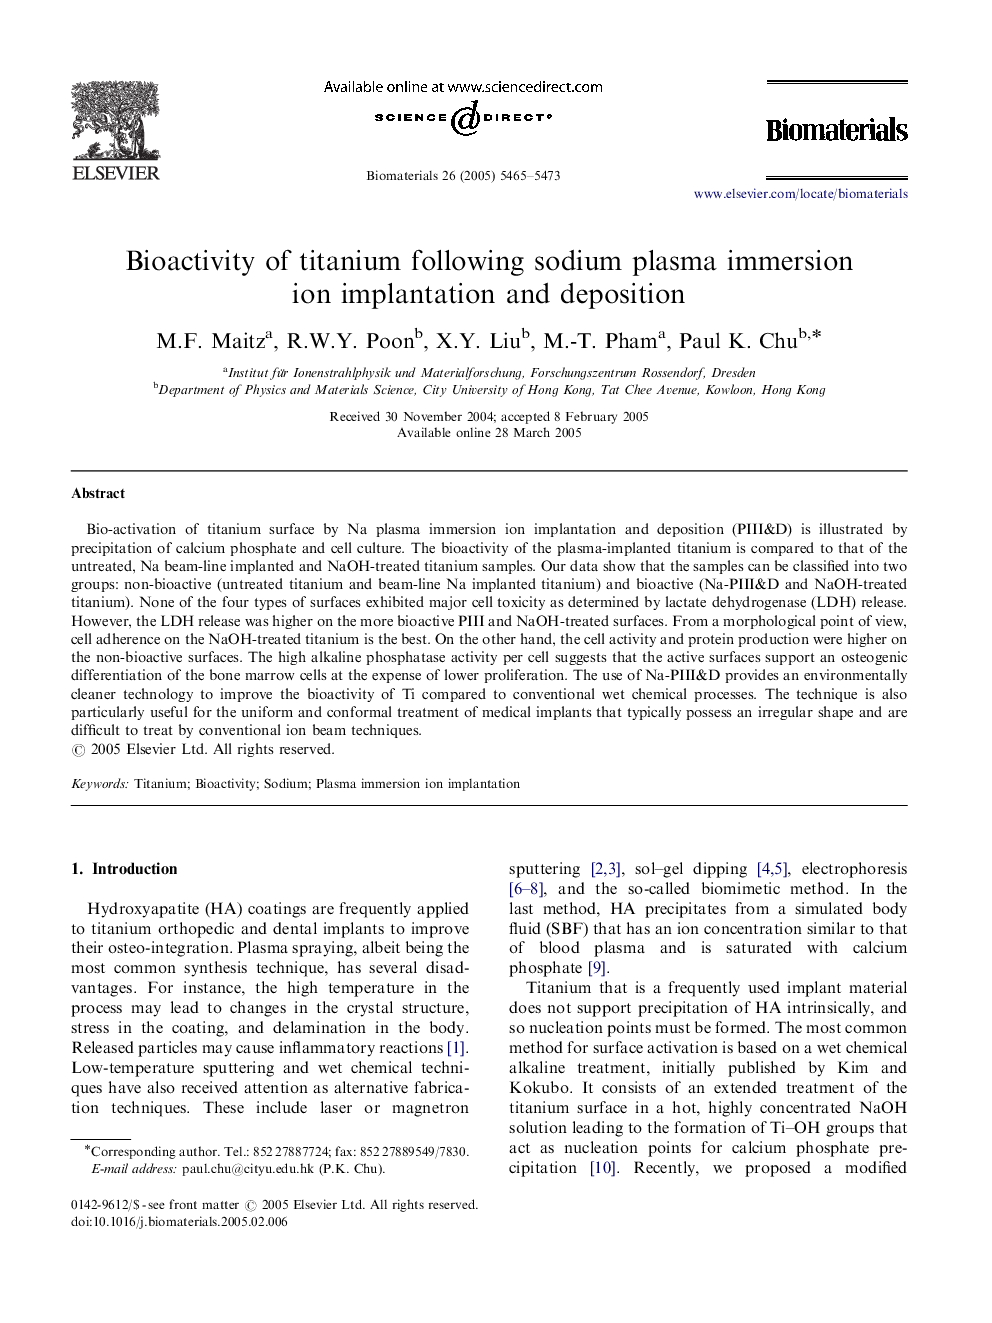 Bioactivity of titanium following sodium plasma immersion ion implantation and deposition